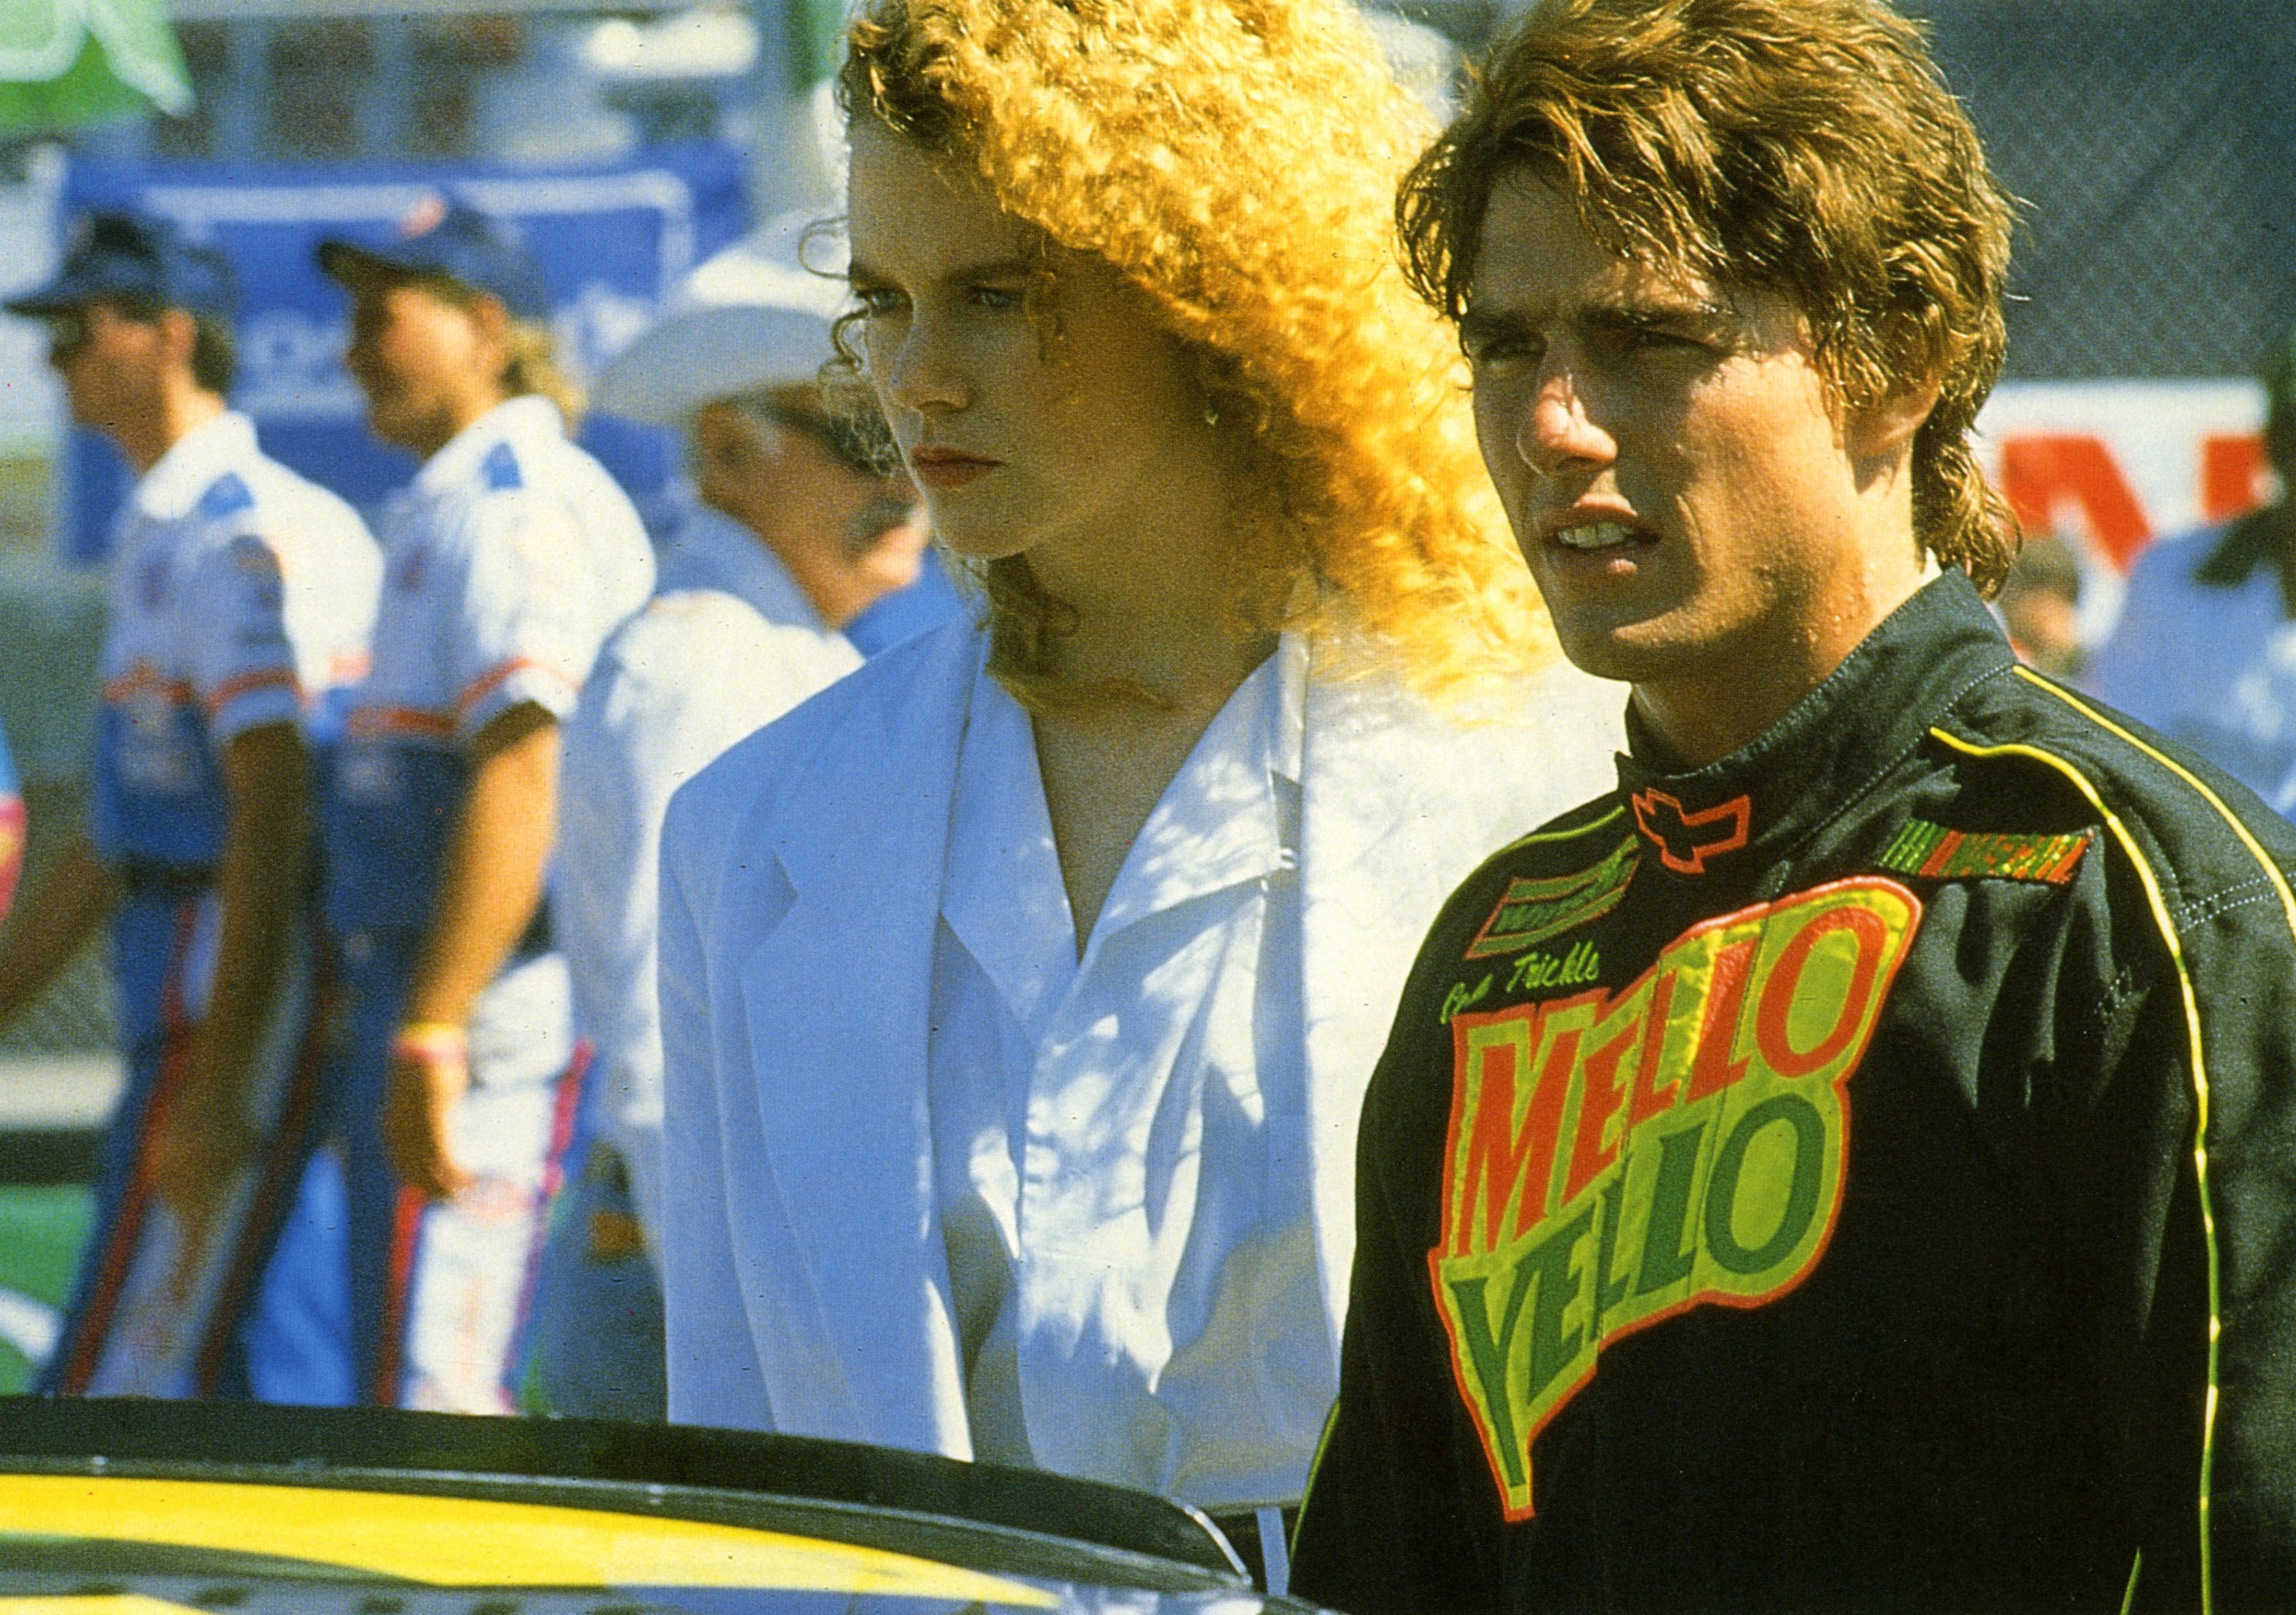 Tom Cruise and Nicole Kidman stand near a race car